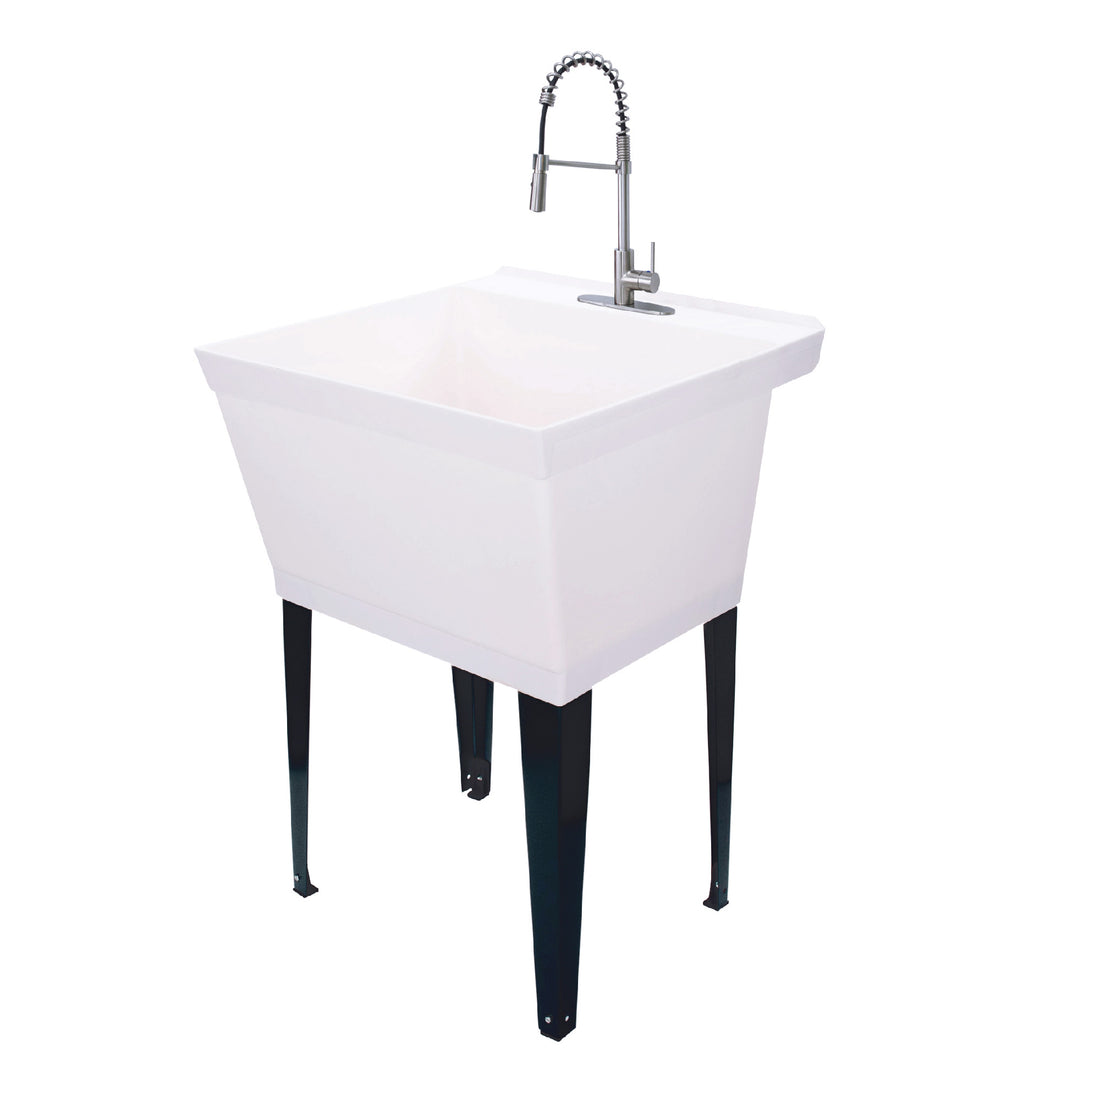 Tehila Standard Freestanding White Utility Sink with Stainless Steel Finish High-Arc Coil Pull-Down Faucet - Utility sinks vanites Tehila